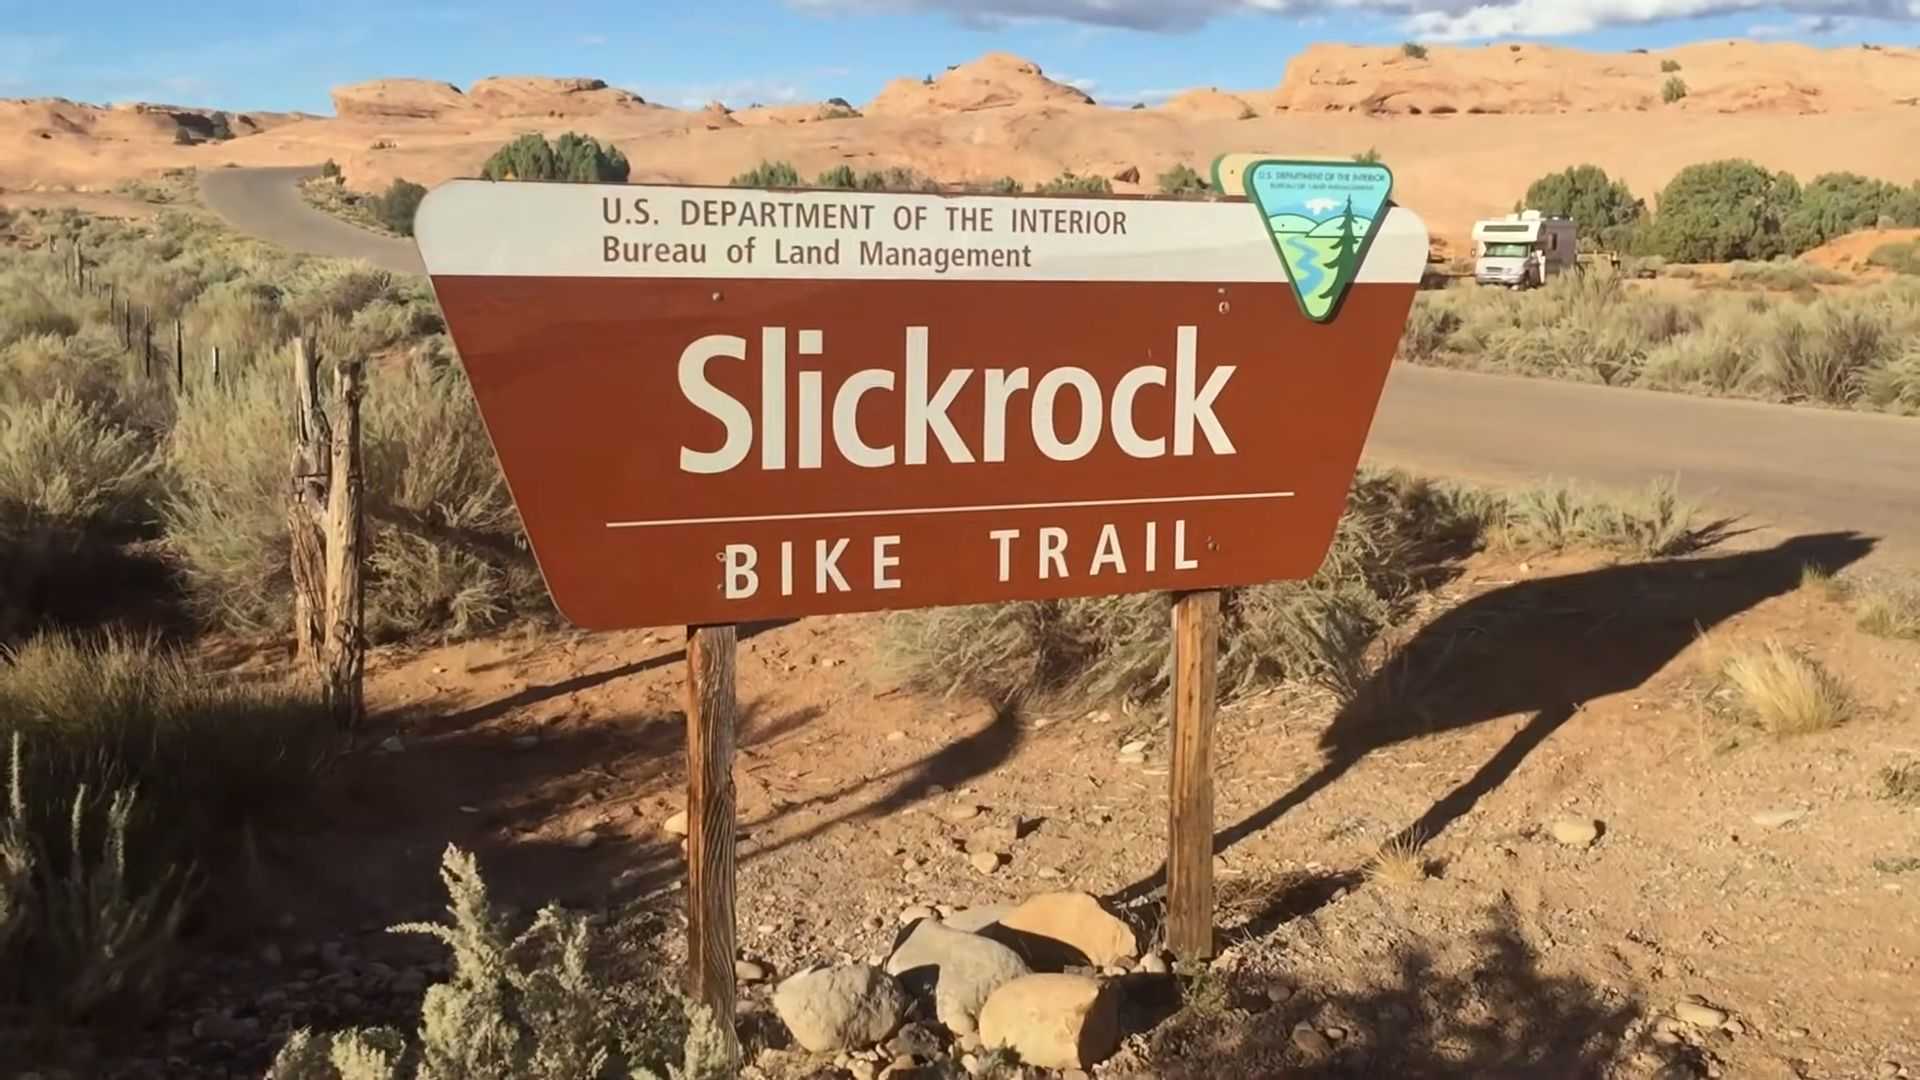 slickrock-v-Slickrock-MTB-Trail-The-Most-Famous-Bike-Trail-Trail-Sign.jpg